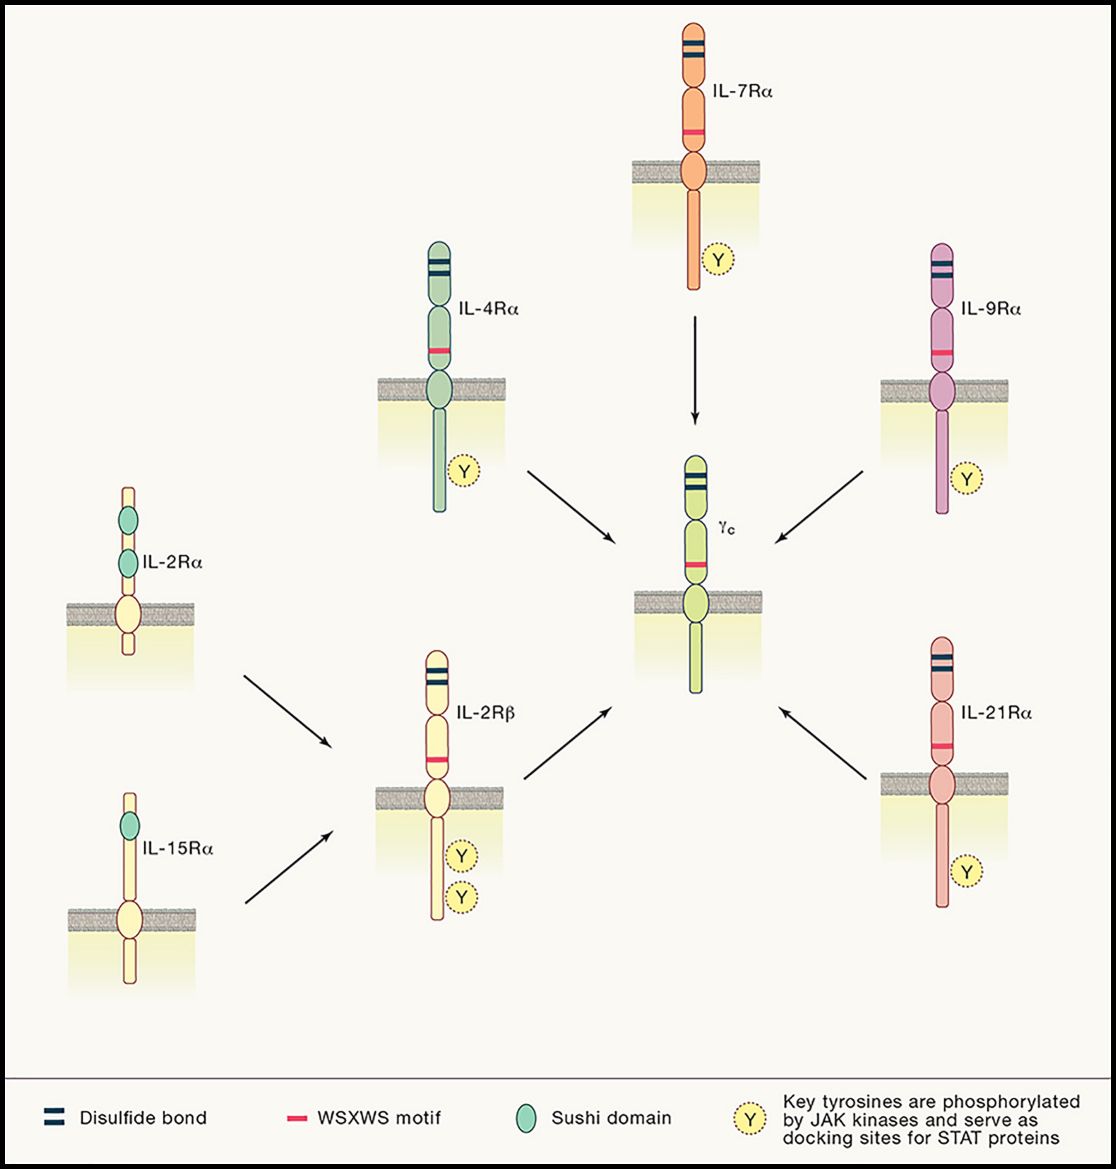 Schematic of γc family cytokine receptor chains.